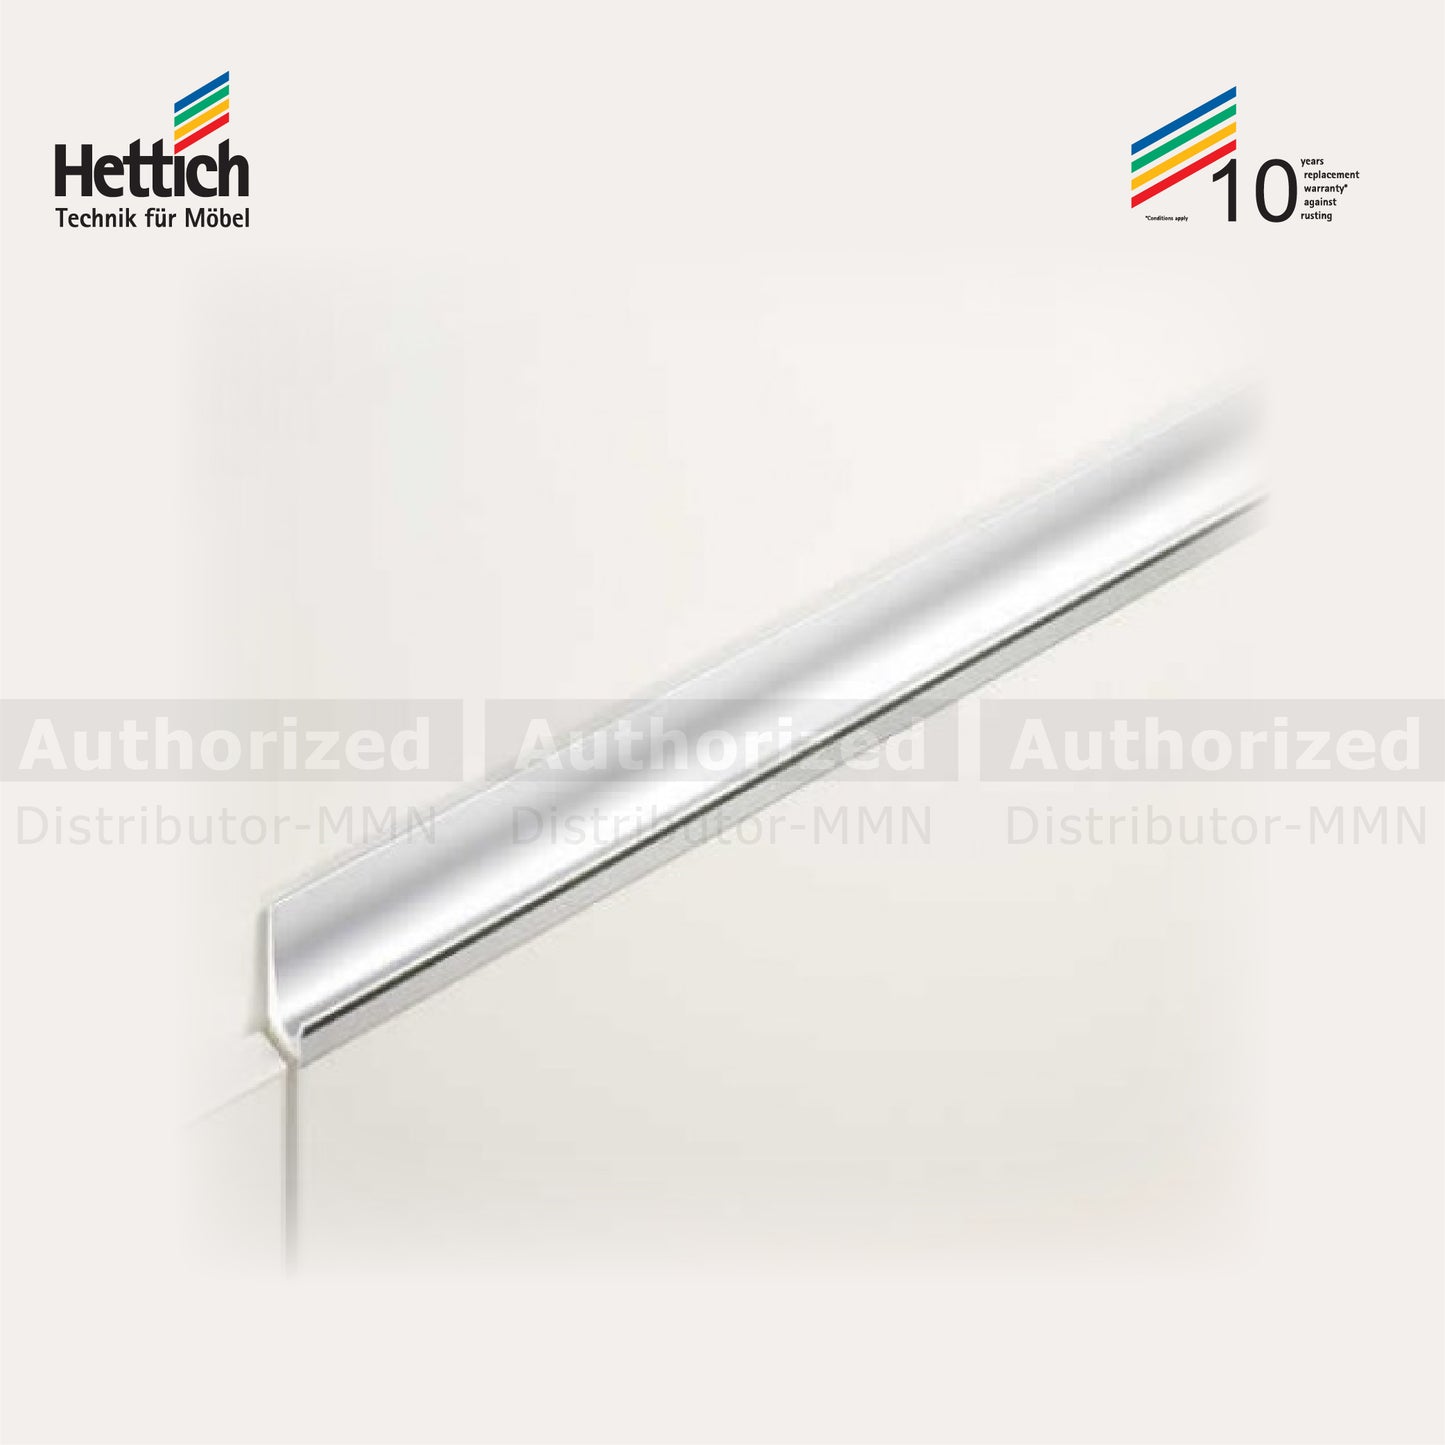 Hettich Lutetia Profile Handle J Type, Height 28mm / Length 3000mm, Aluminium Finish - HT913375600